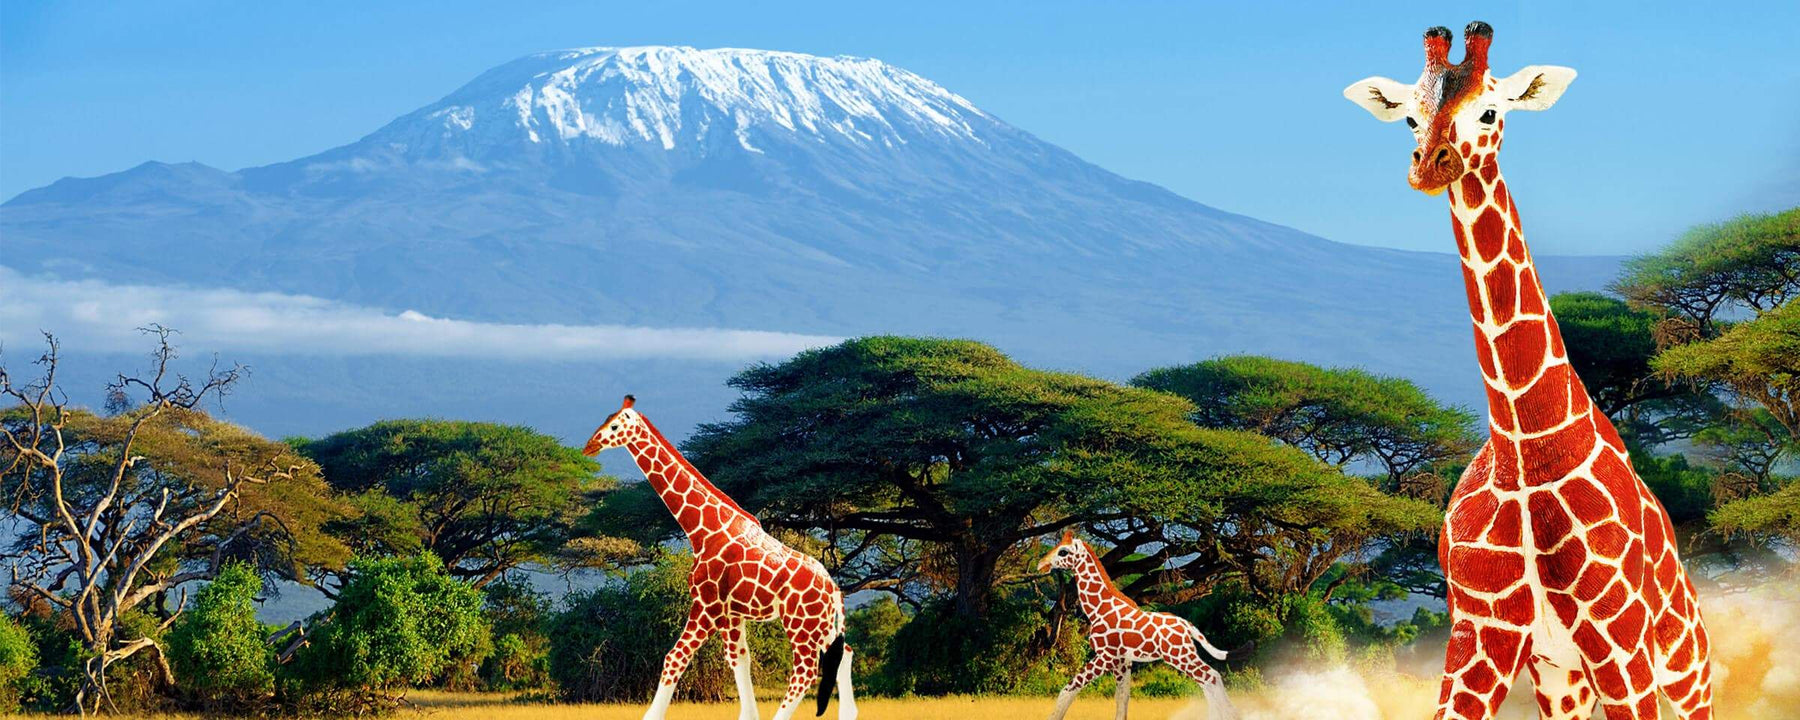 Stick Your Neck Out for World Giraffe Day! - Safari Ltd®